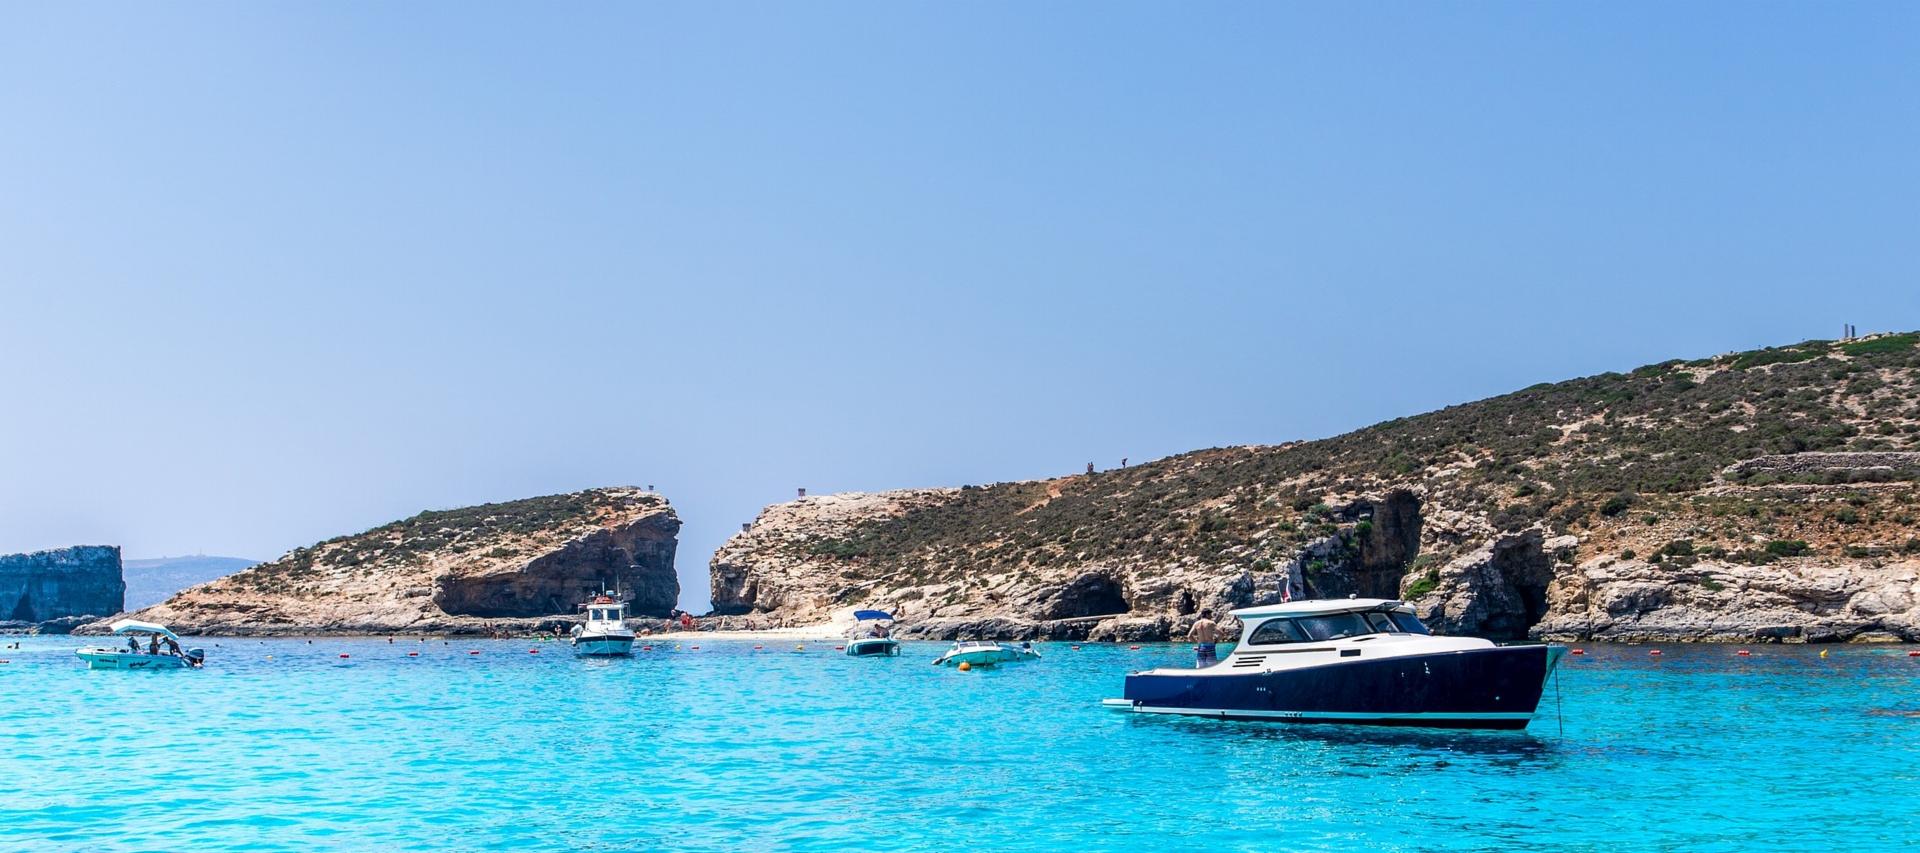 Malta - A Mediterranean Gem For History And Beach Lovers